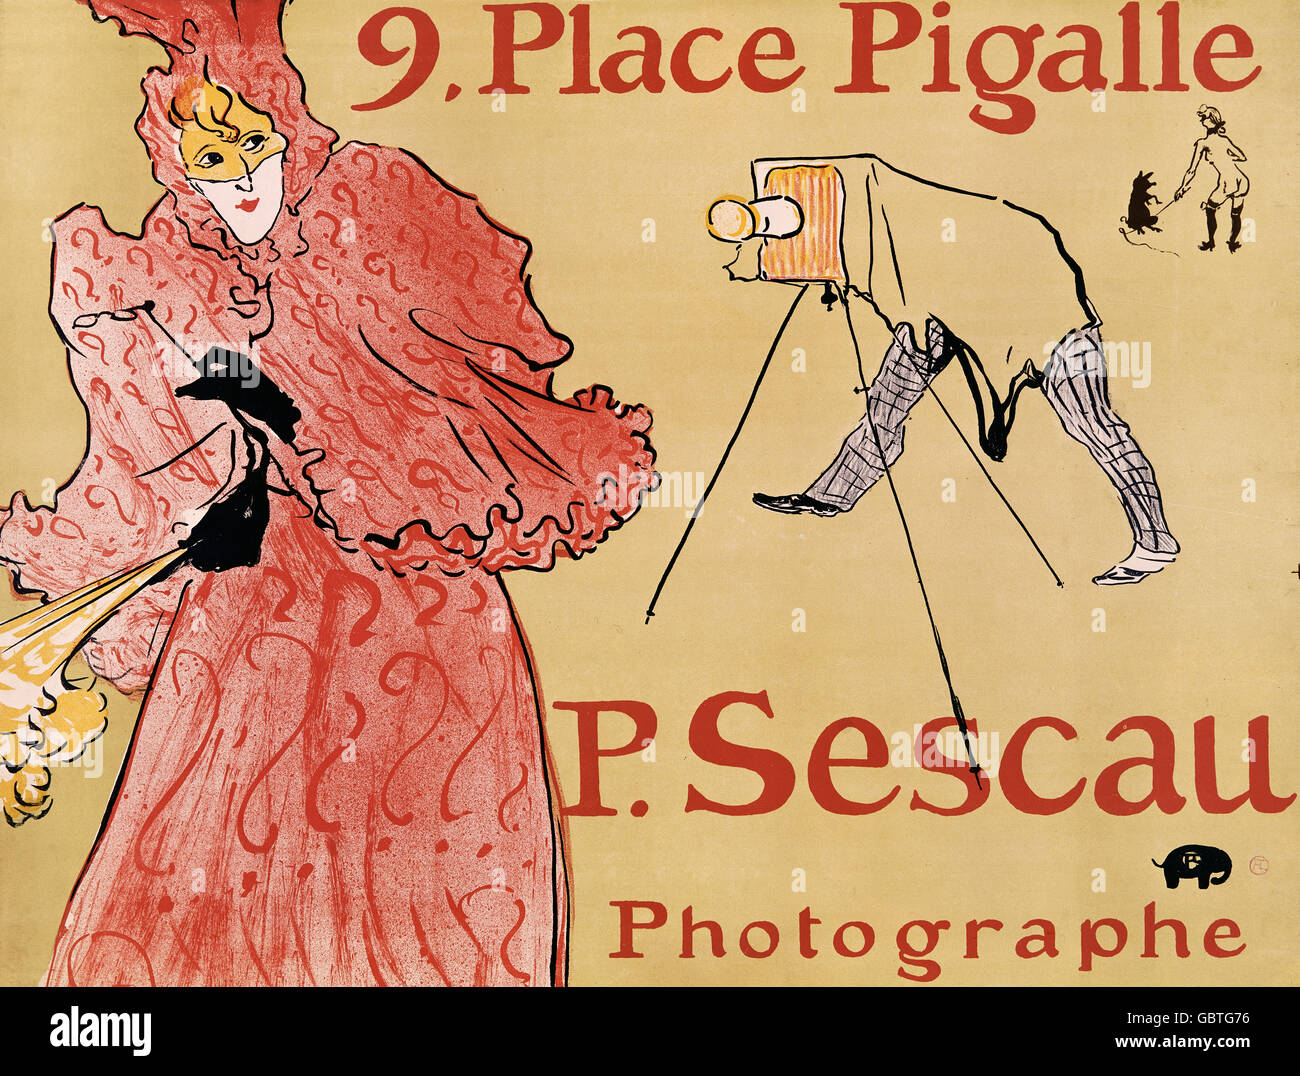 P.Sescau-Fotograf, Werbung von Henri de Toulouse-Lautrec, 19. Jahrhundert Stockfoto